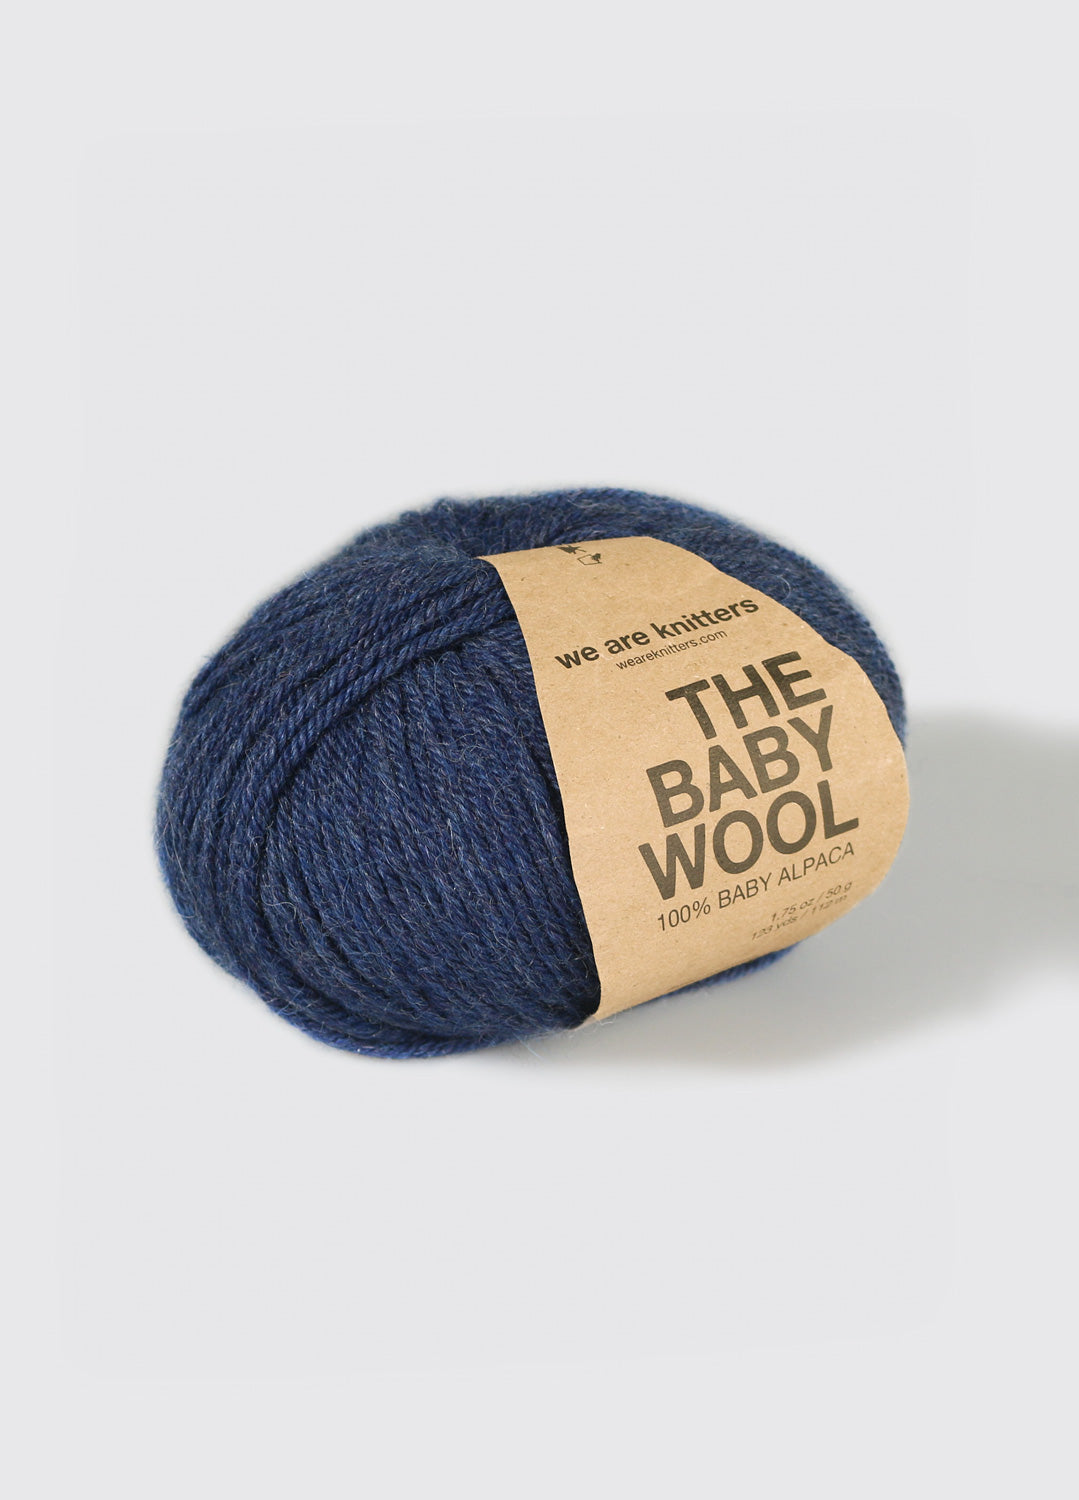 BABY ALPACA SILK - Aawool. Tu tienda online de lanas.